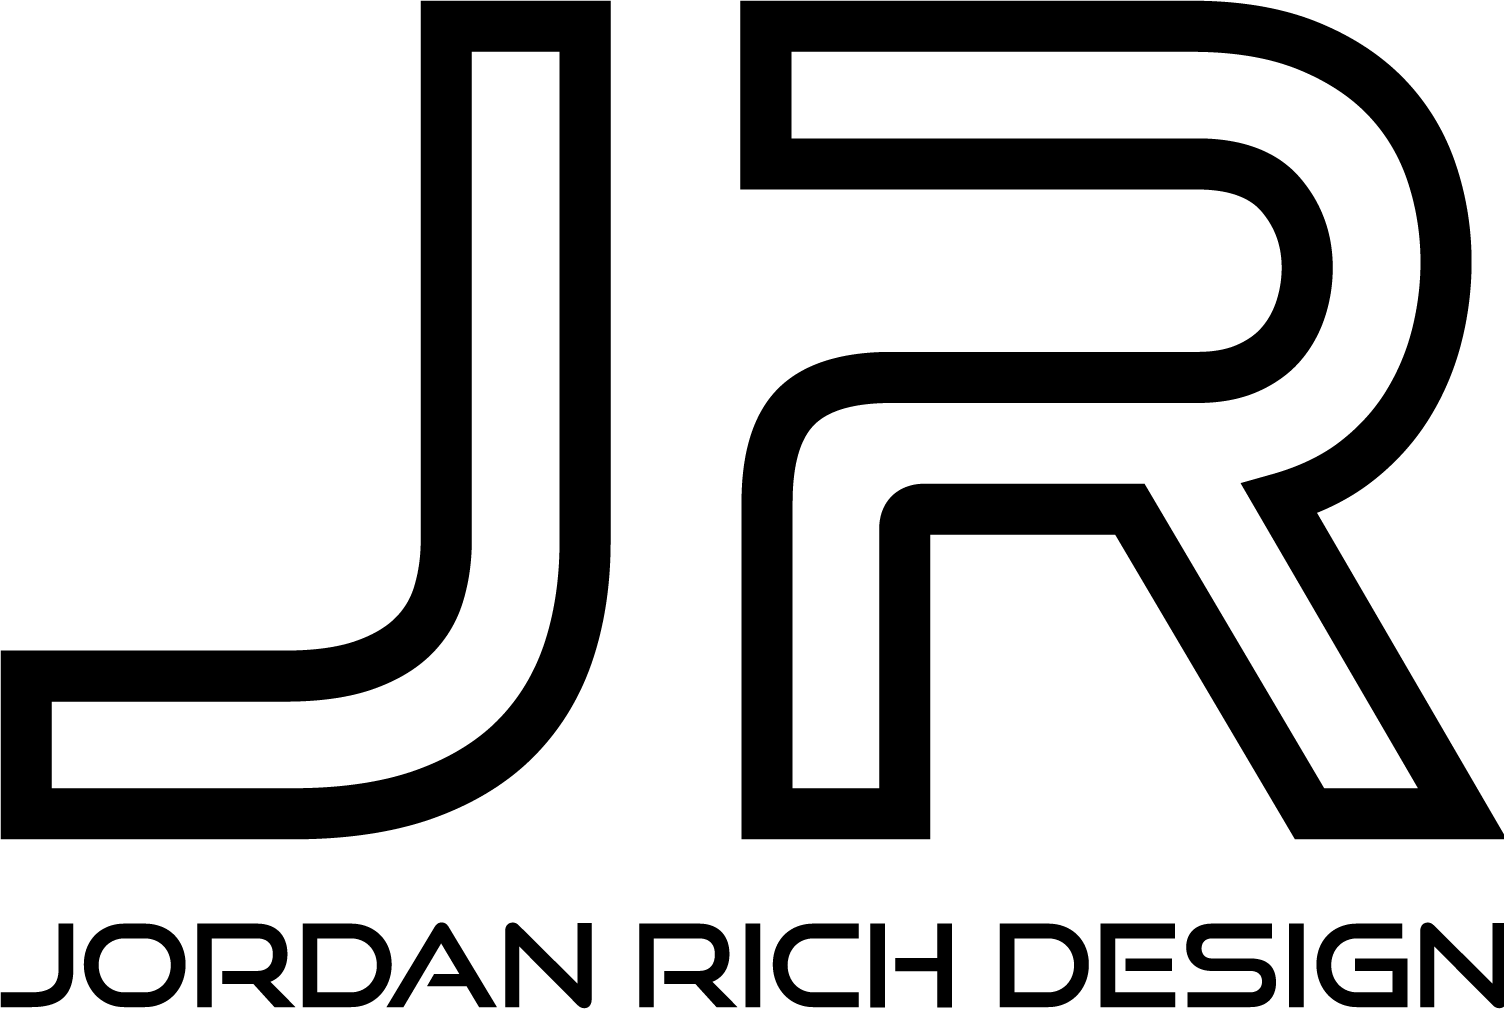 Jordan Rich